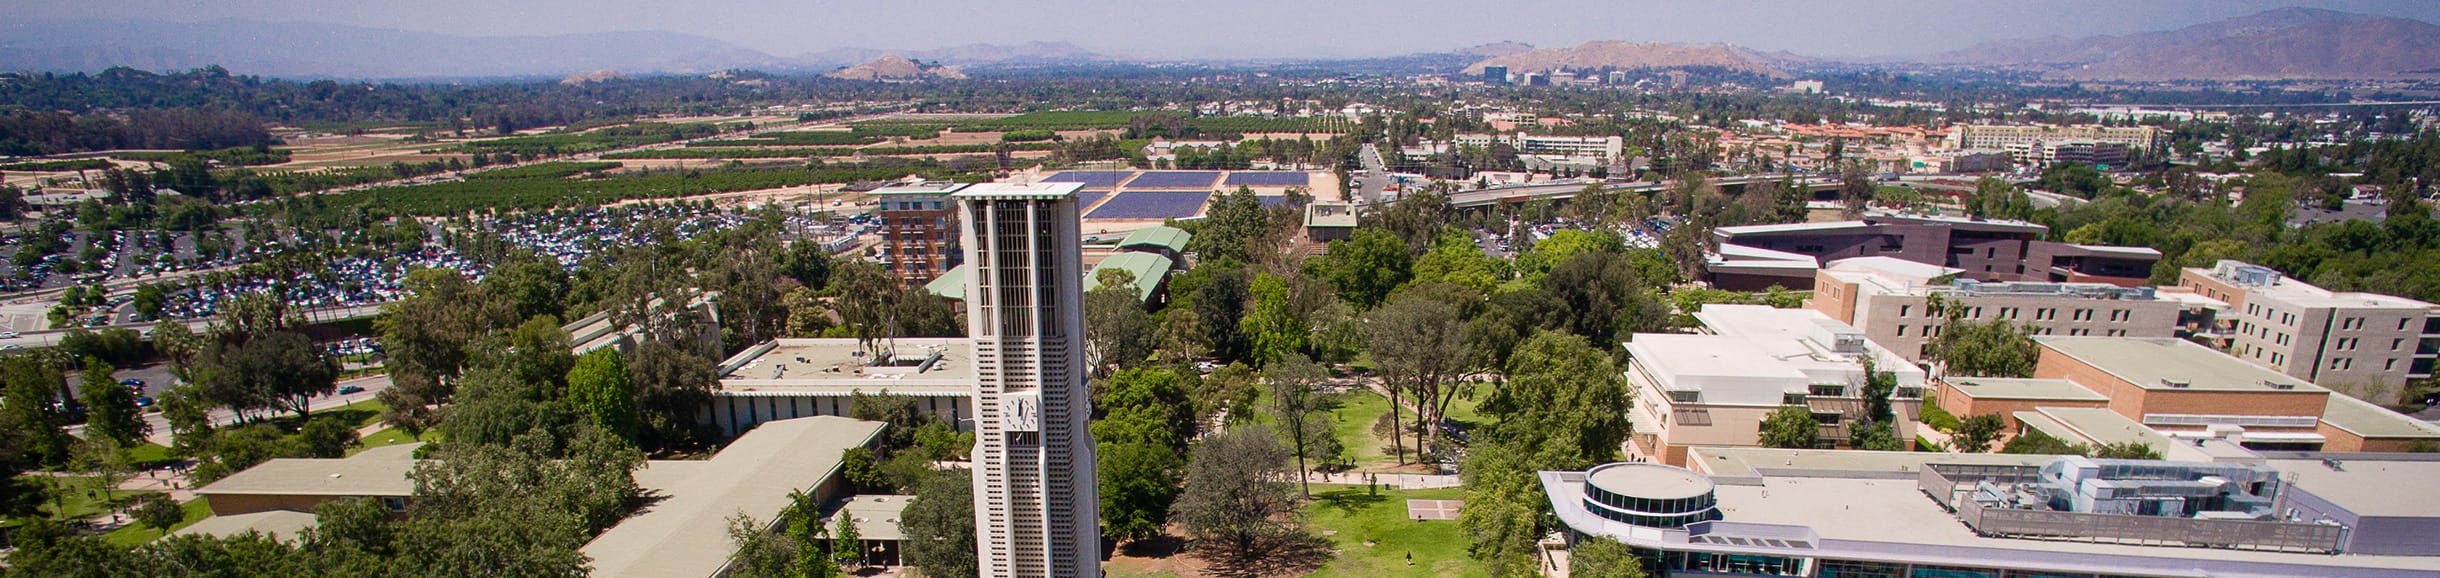 UC Riverside Campus